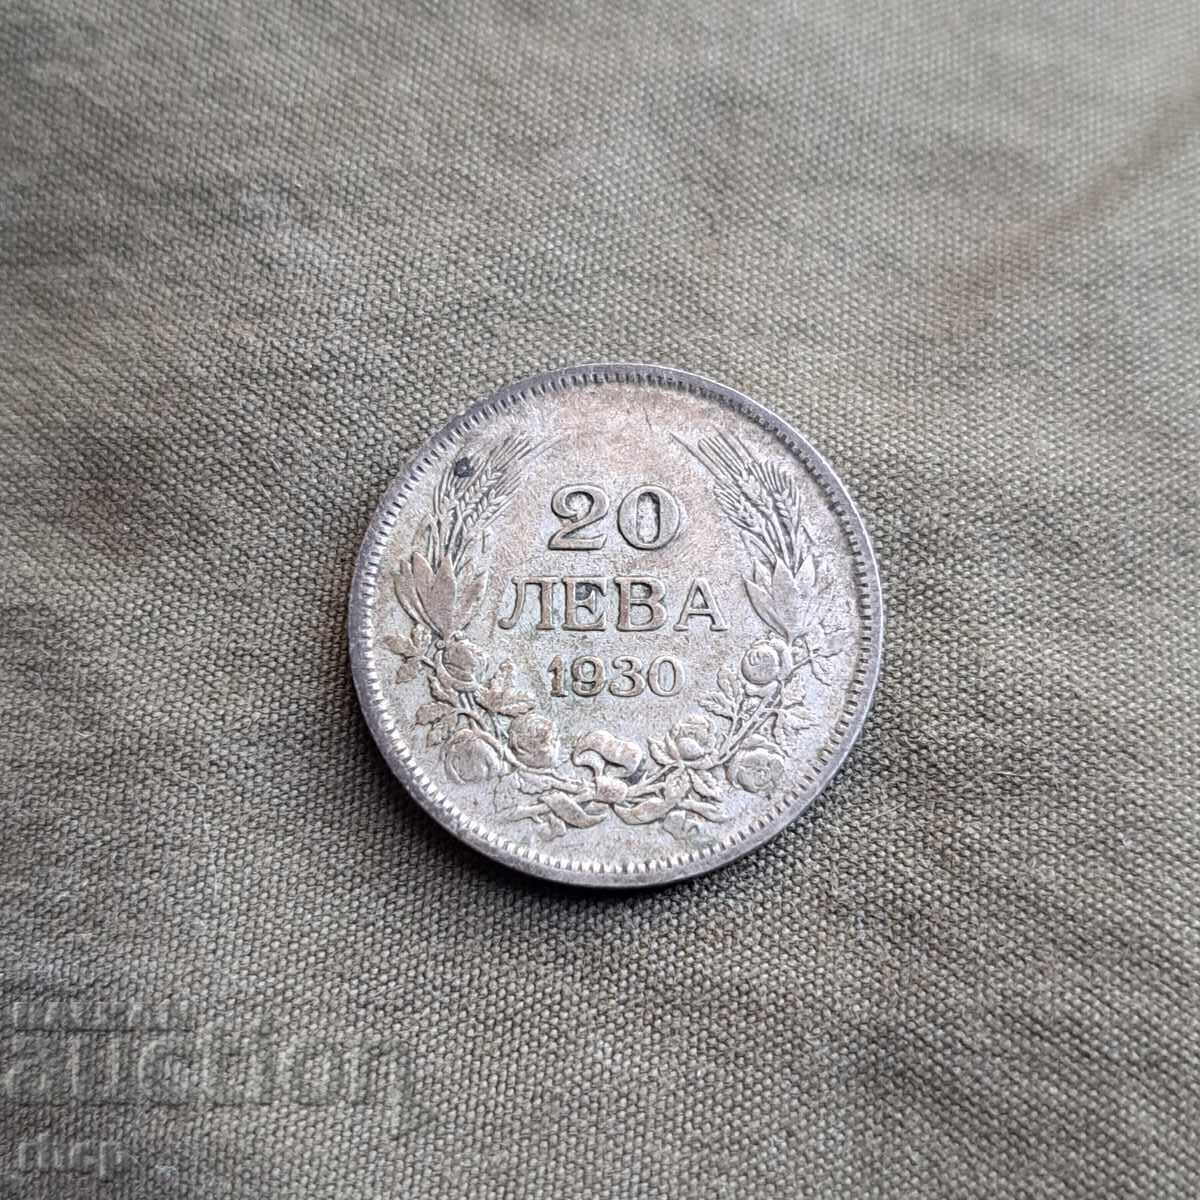 20 BGN 1930 coin ....1